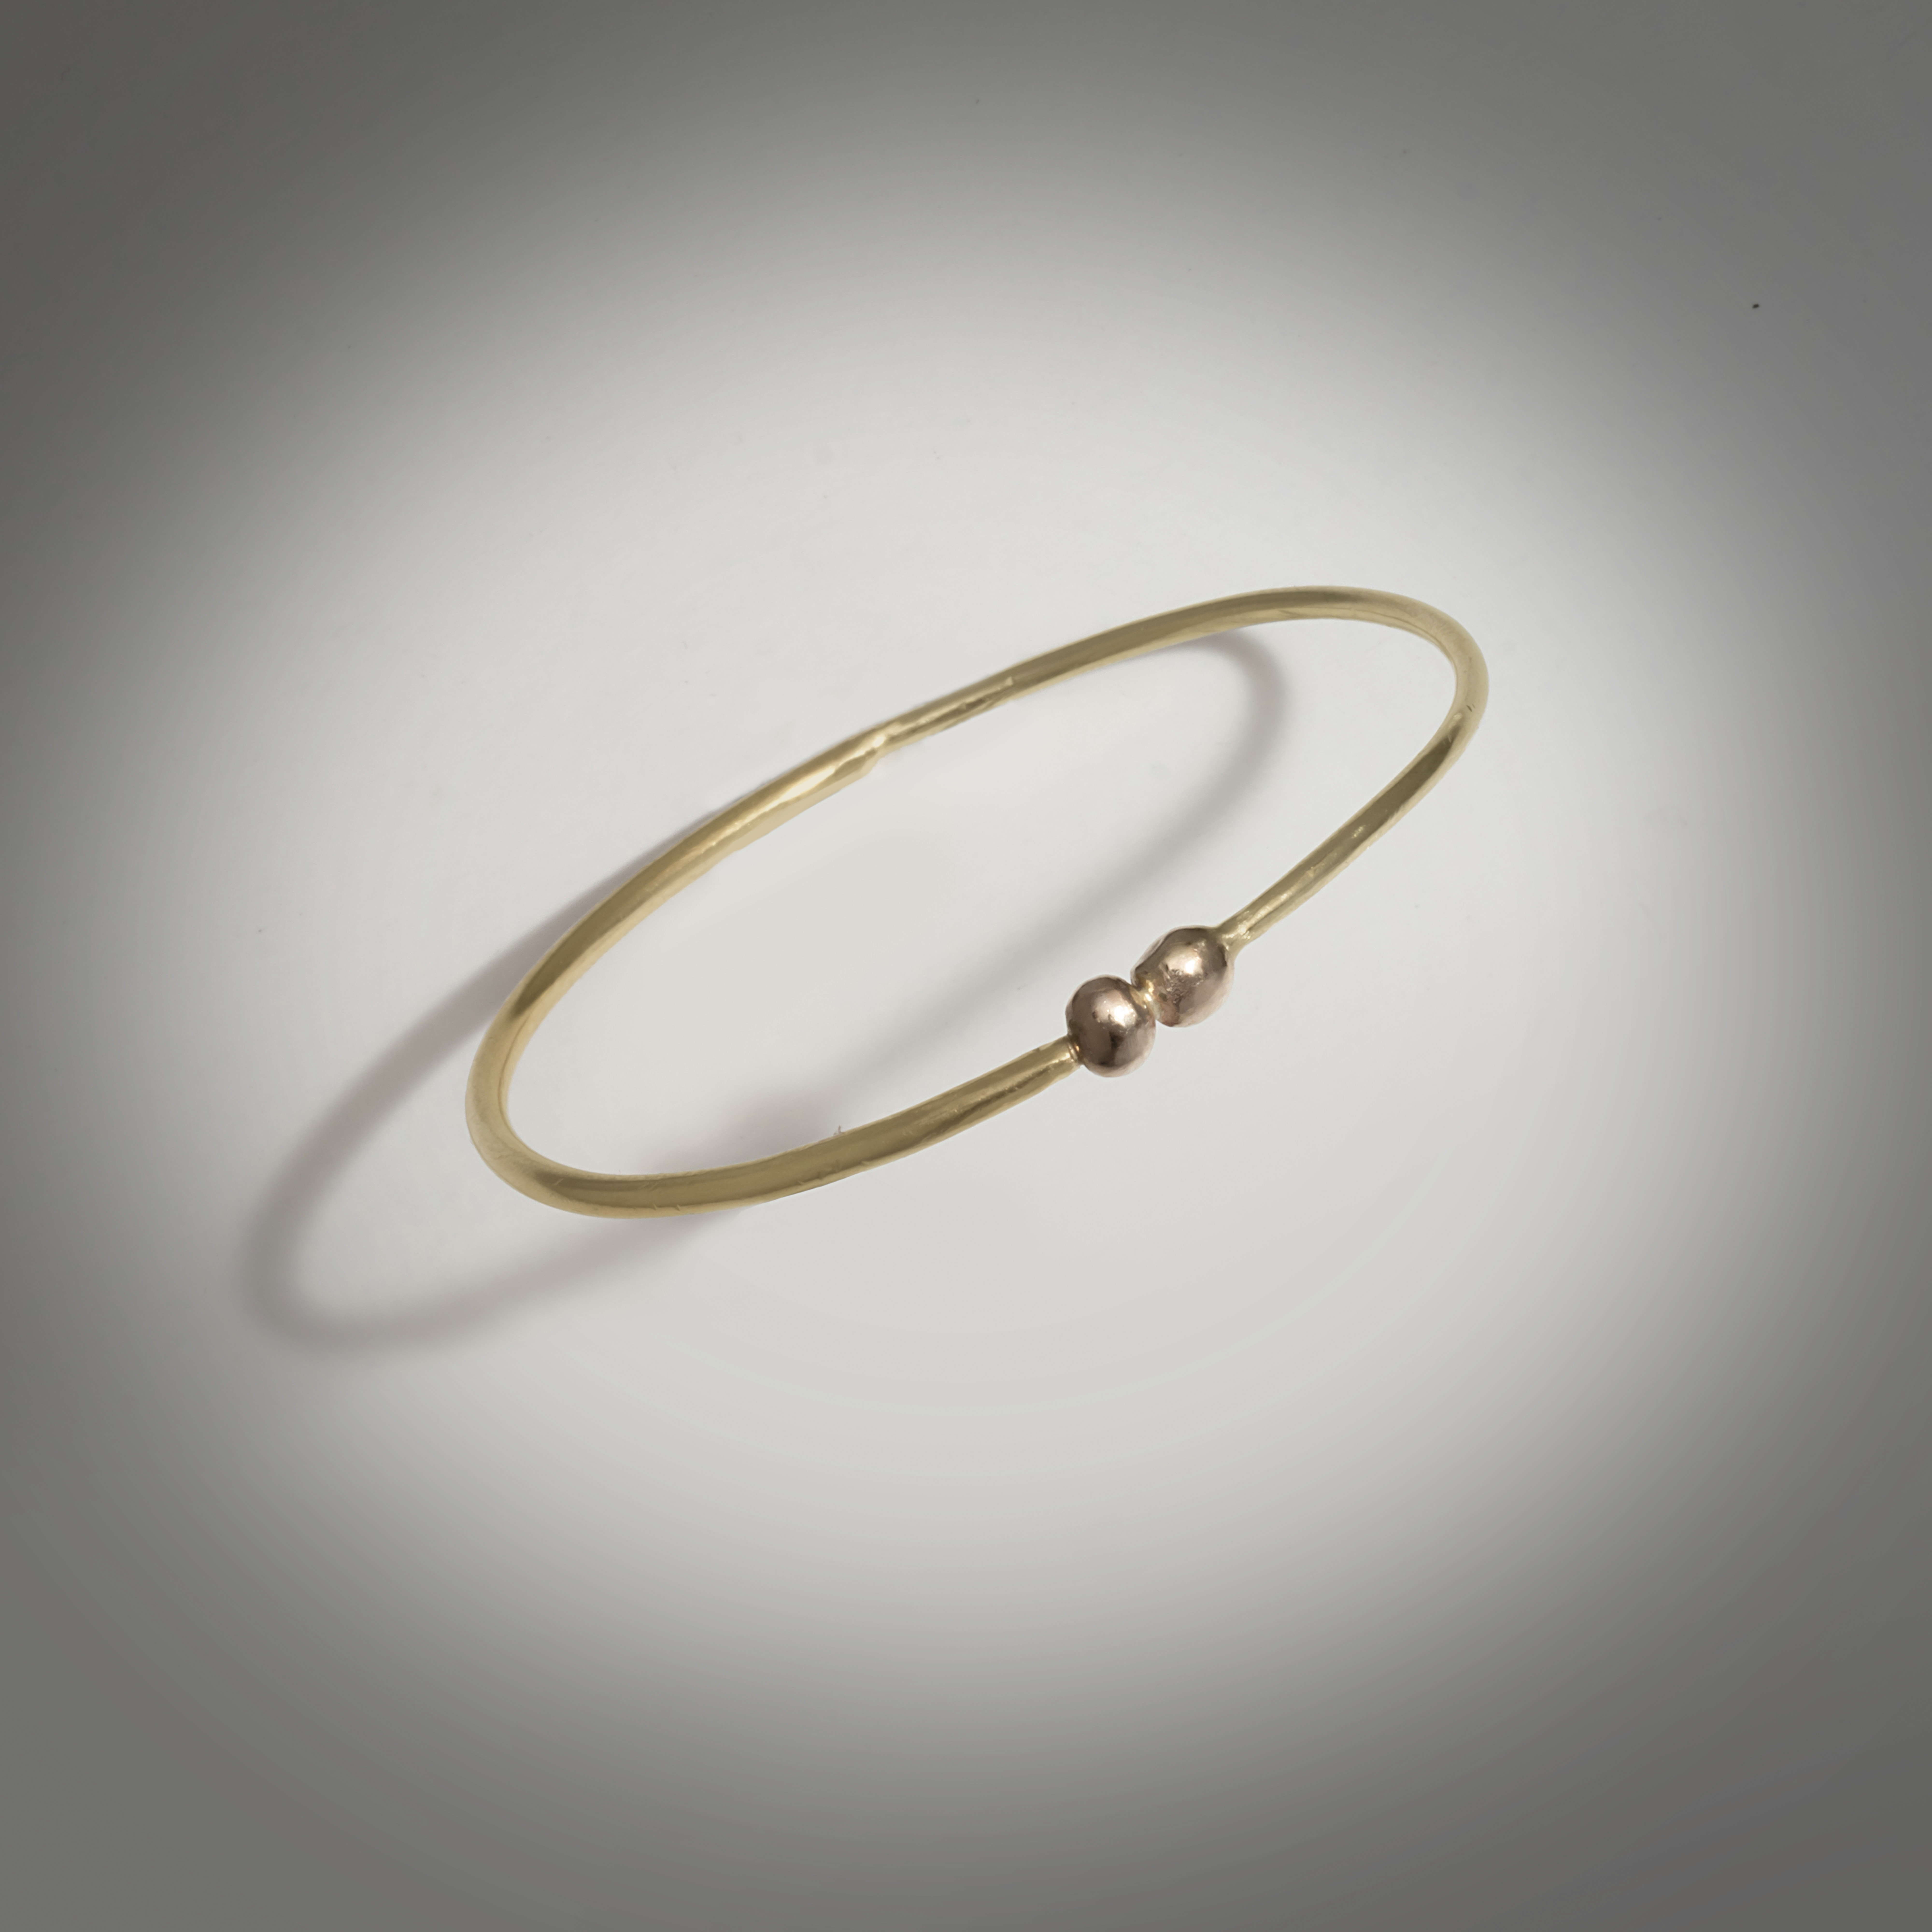 Circle Bangle bracelet with pebble detail, 18k Yellow gold